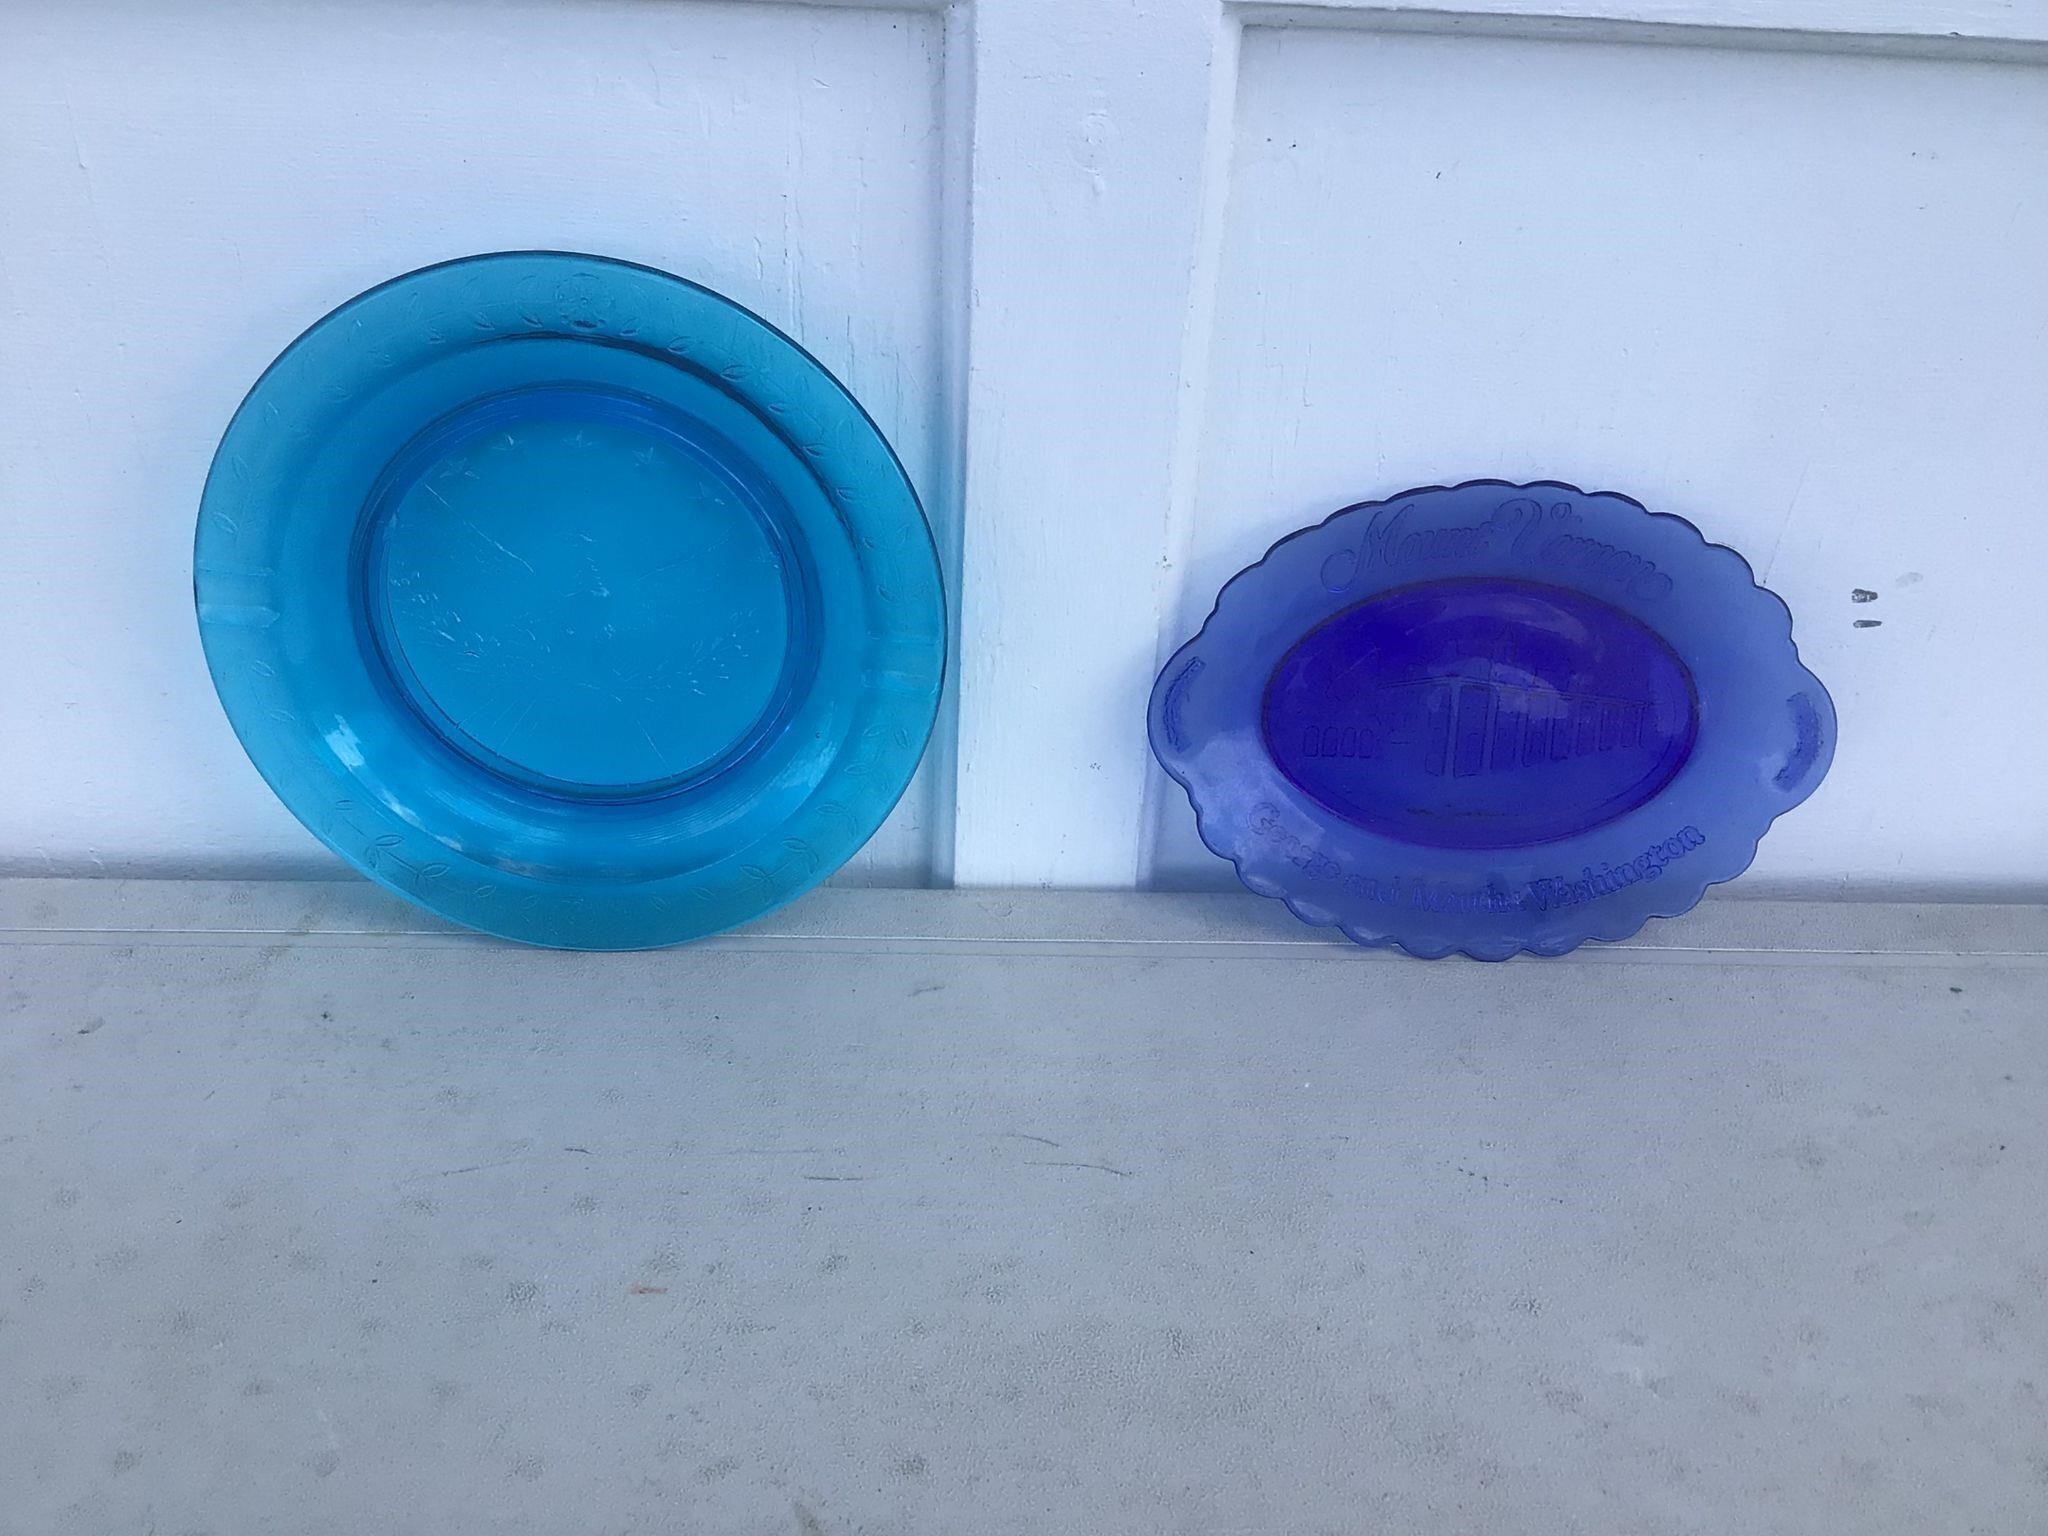 BLUE GLASS PLATES = MOUNT VERNON & EAGLE